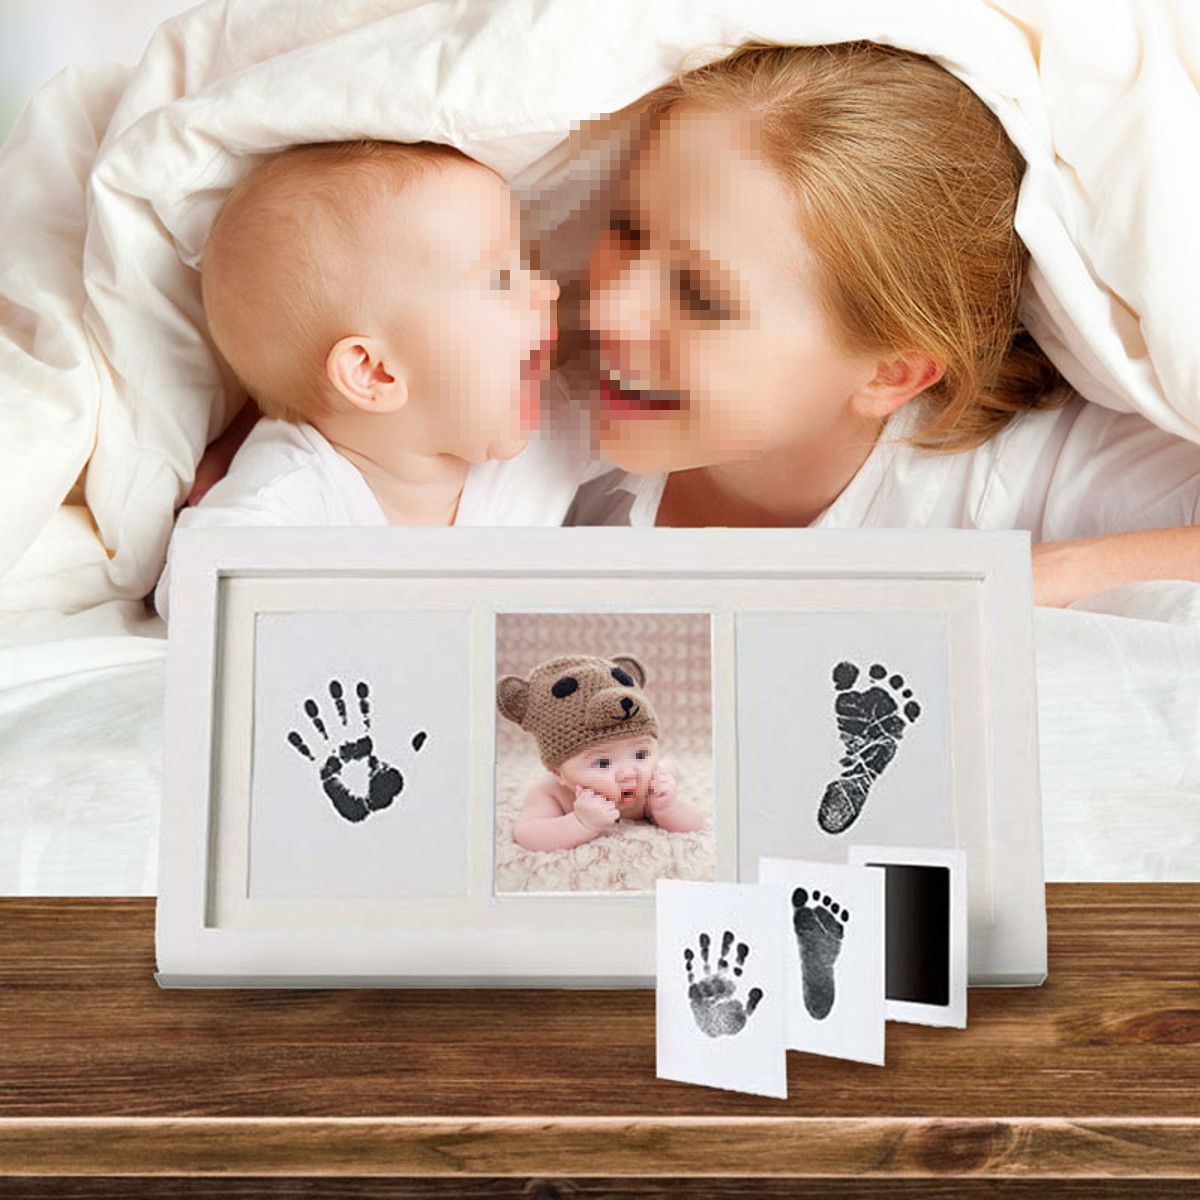 DIY-Baby-Footprint-Handprint-Impression-Ink-Kit-Shadow-Photo-Frame-Keepsake-Baby-Shower-Safe-Gift-1317103